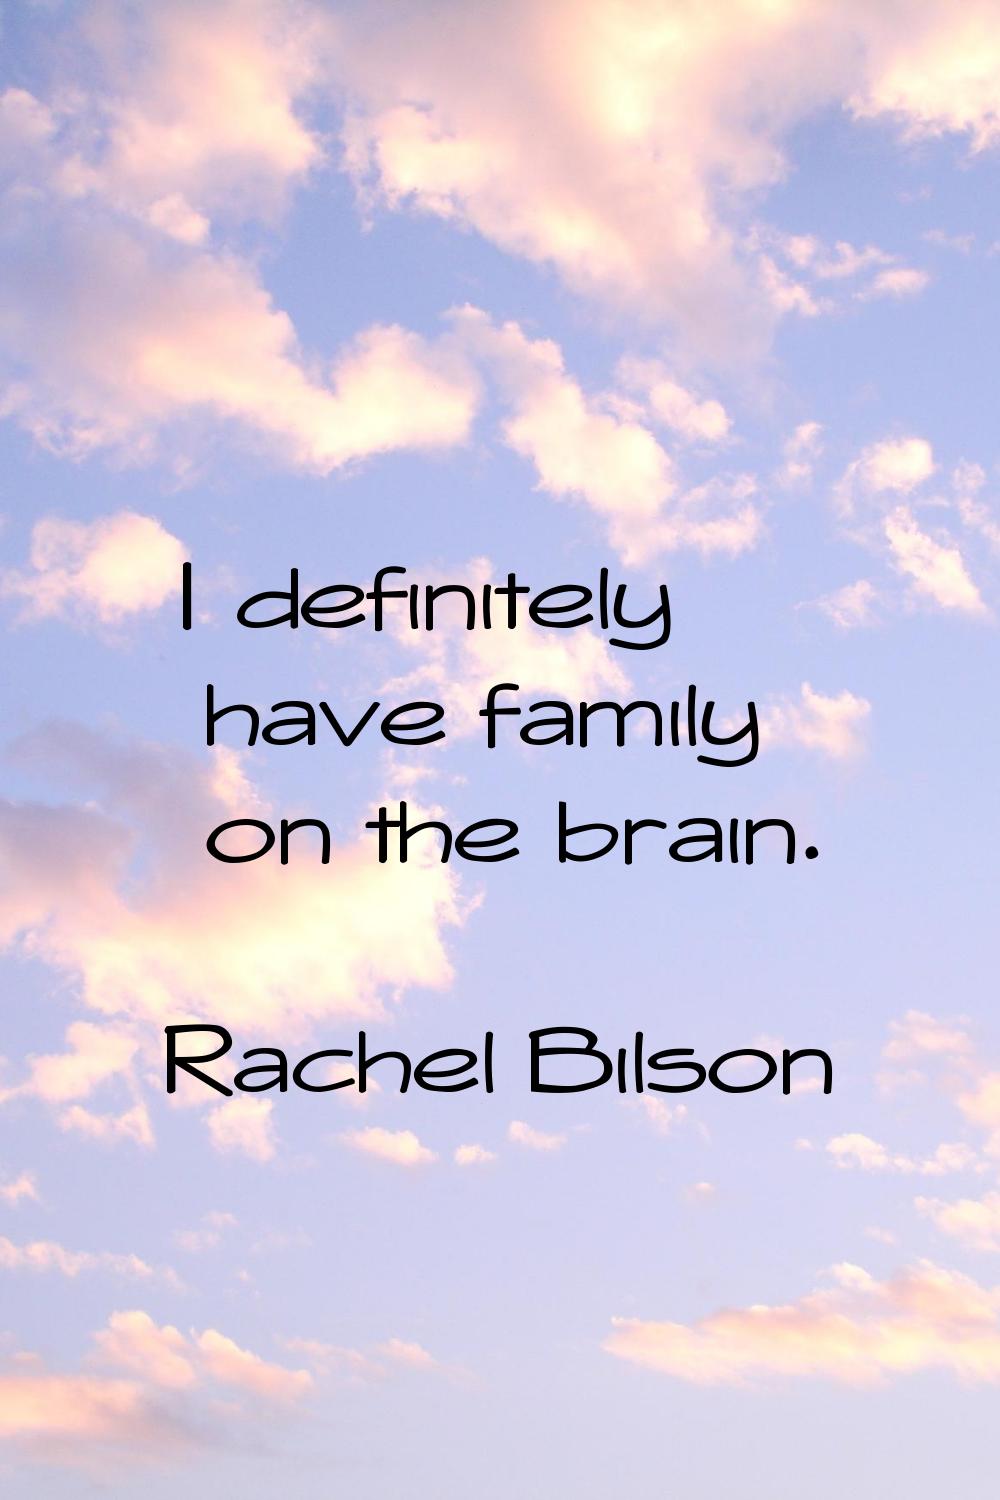 I definitely have family on the brain.